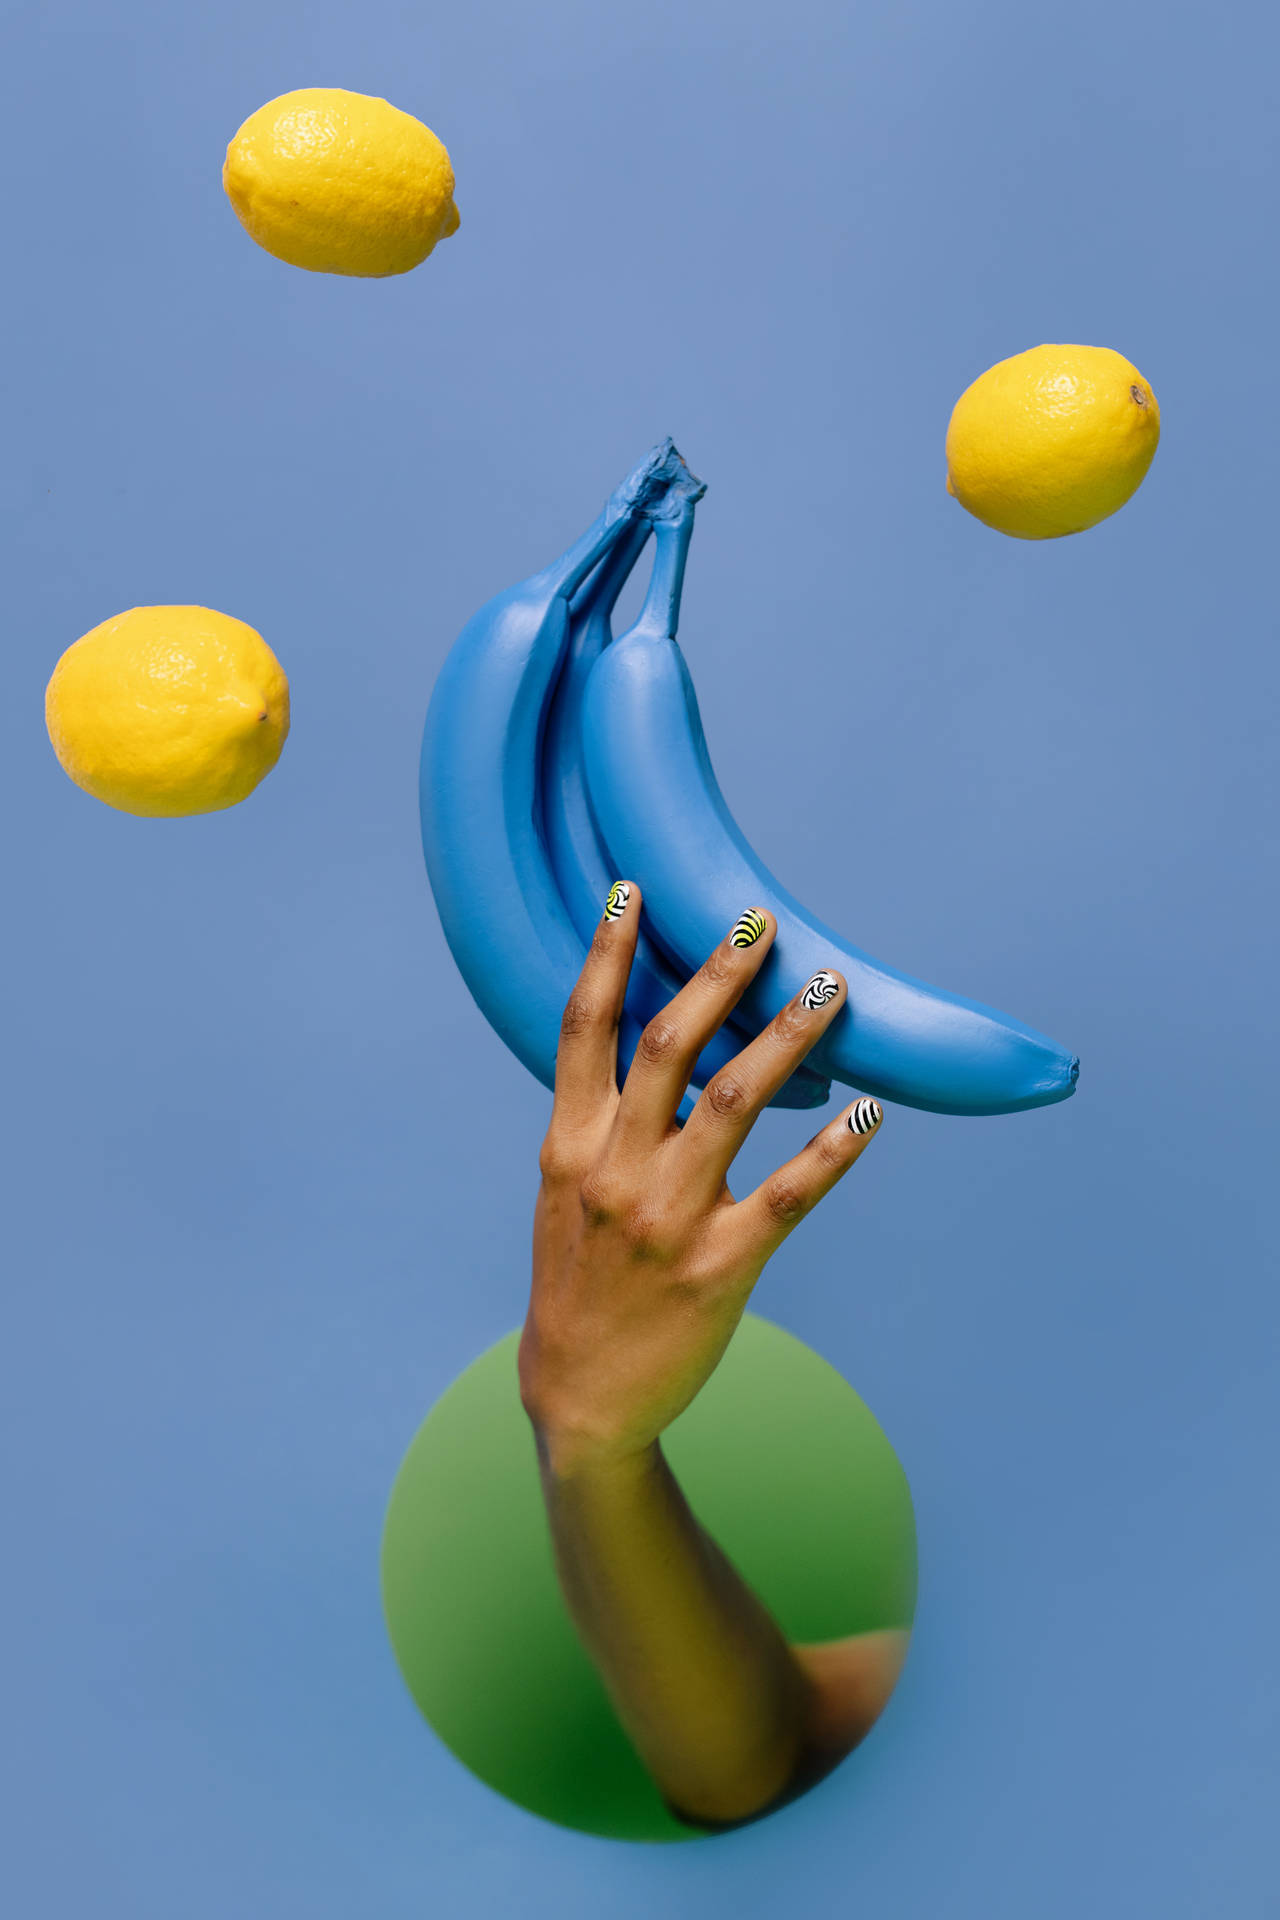 Rare Blue Bananas And Lemons Artistic Display Background